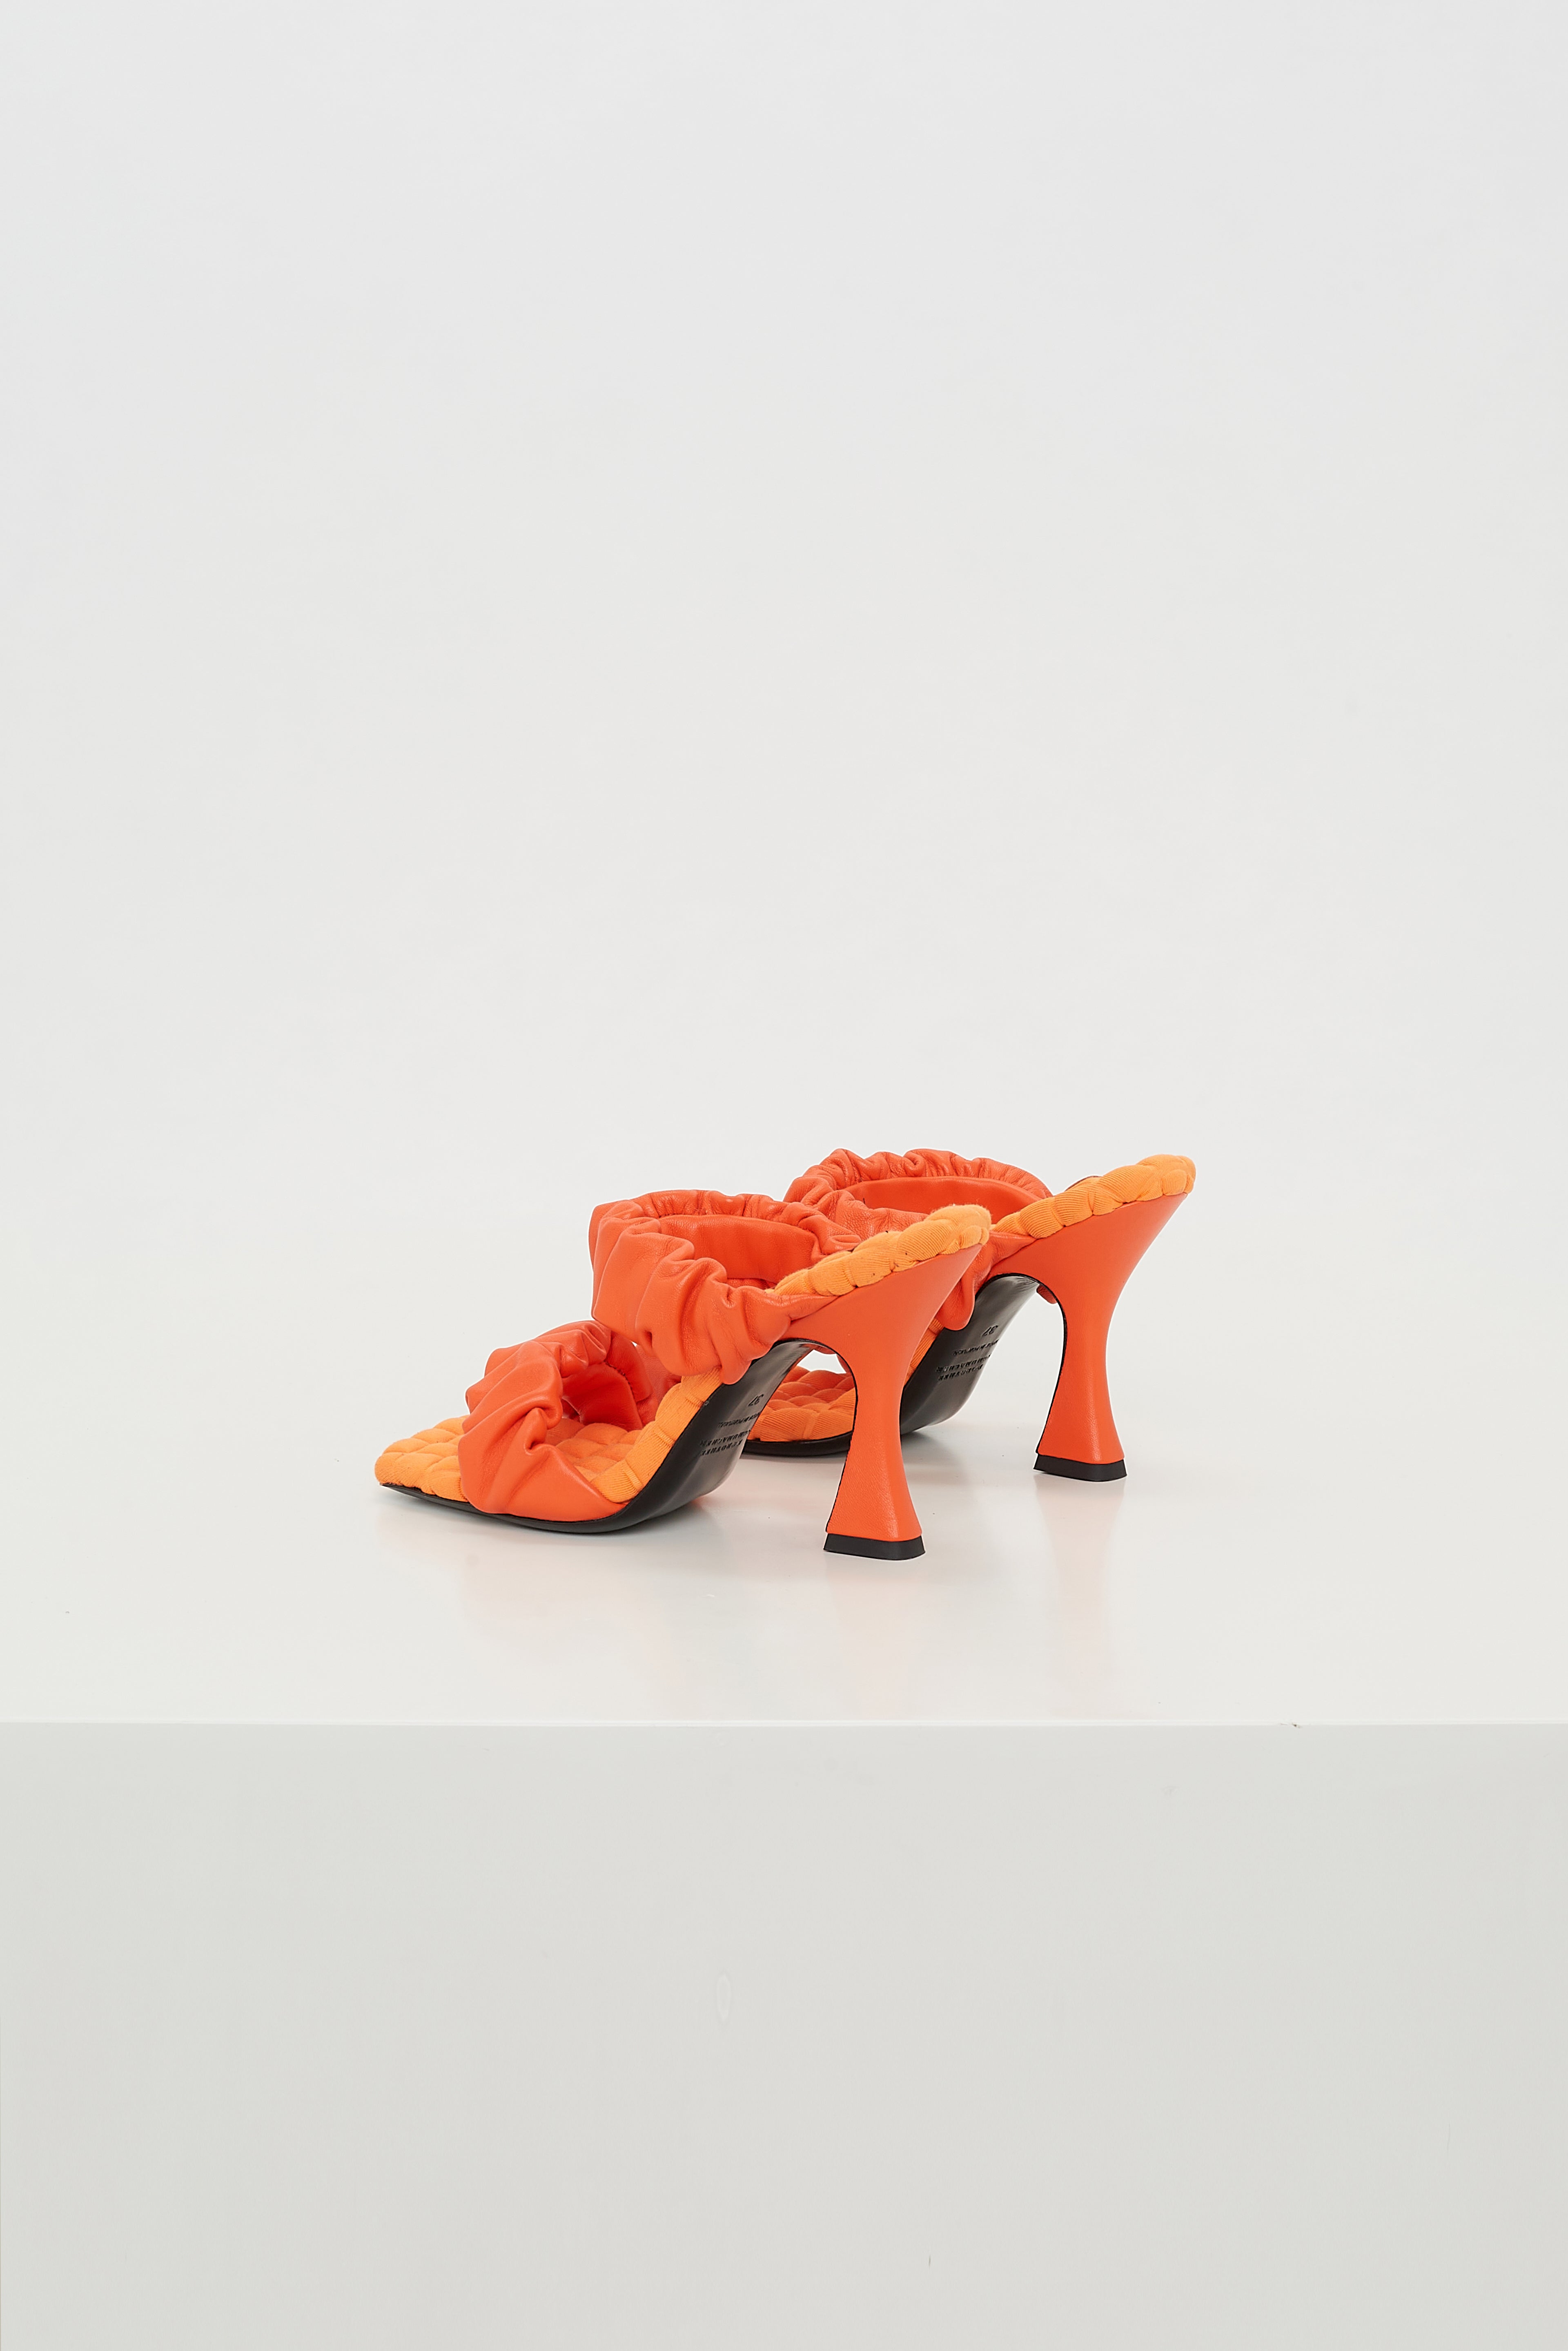 Dorothee-Schumacher-OUTLET-SALE-SPORTY-FEMININITY-sandal-heeled-Sandalen-ARCHIVE-COLLECTION-3.jpg